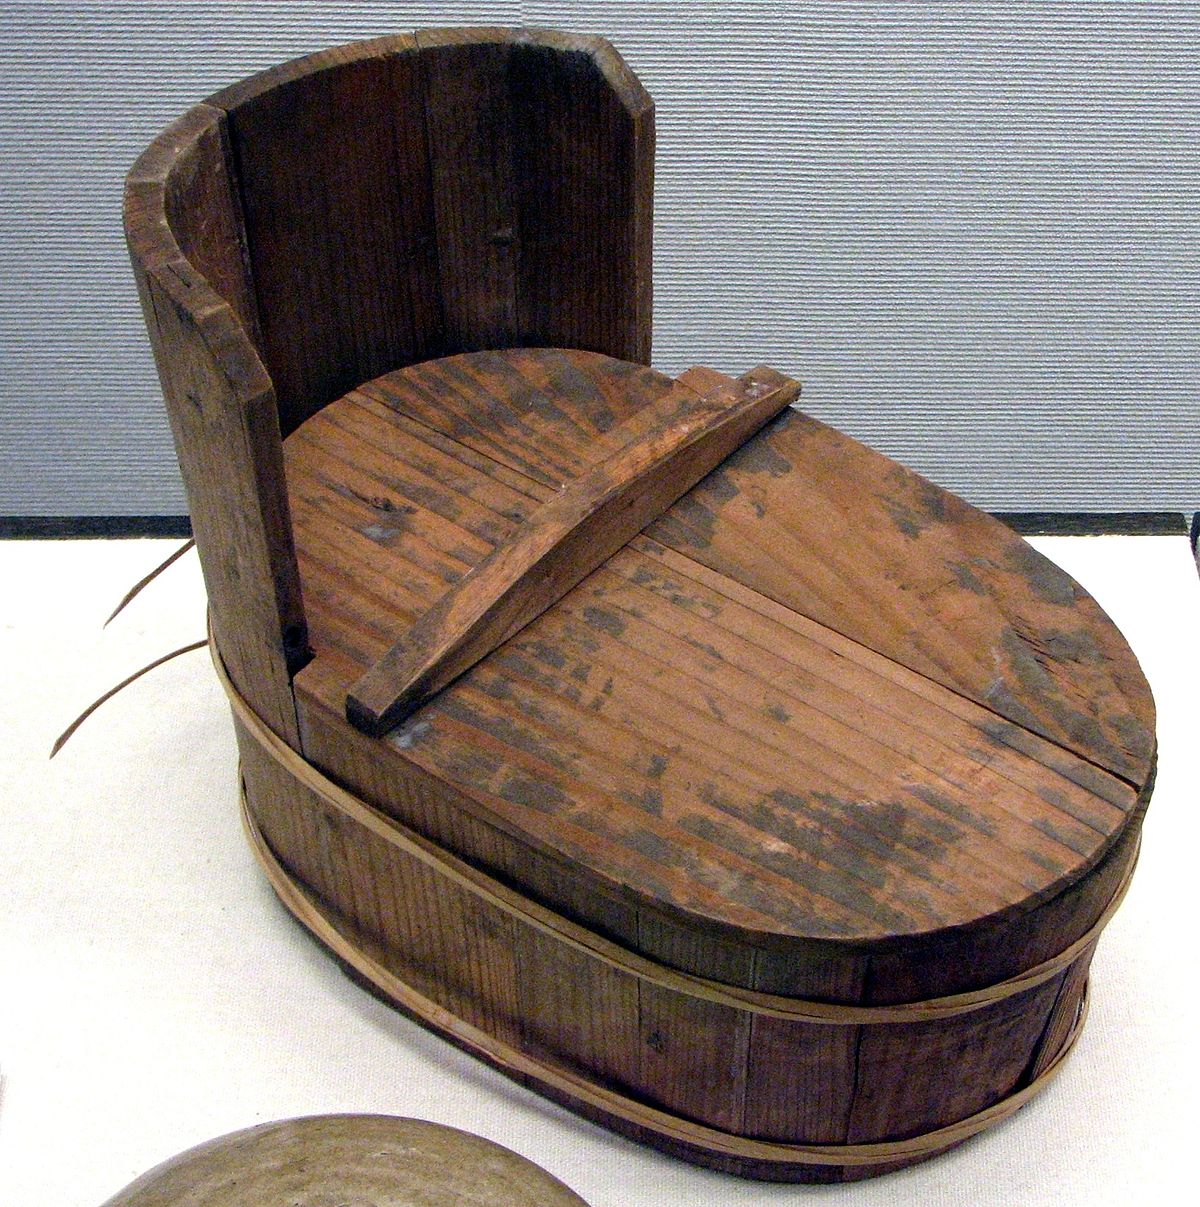 File:Pot de chambre 2.jpg - Wikimedia Commons